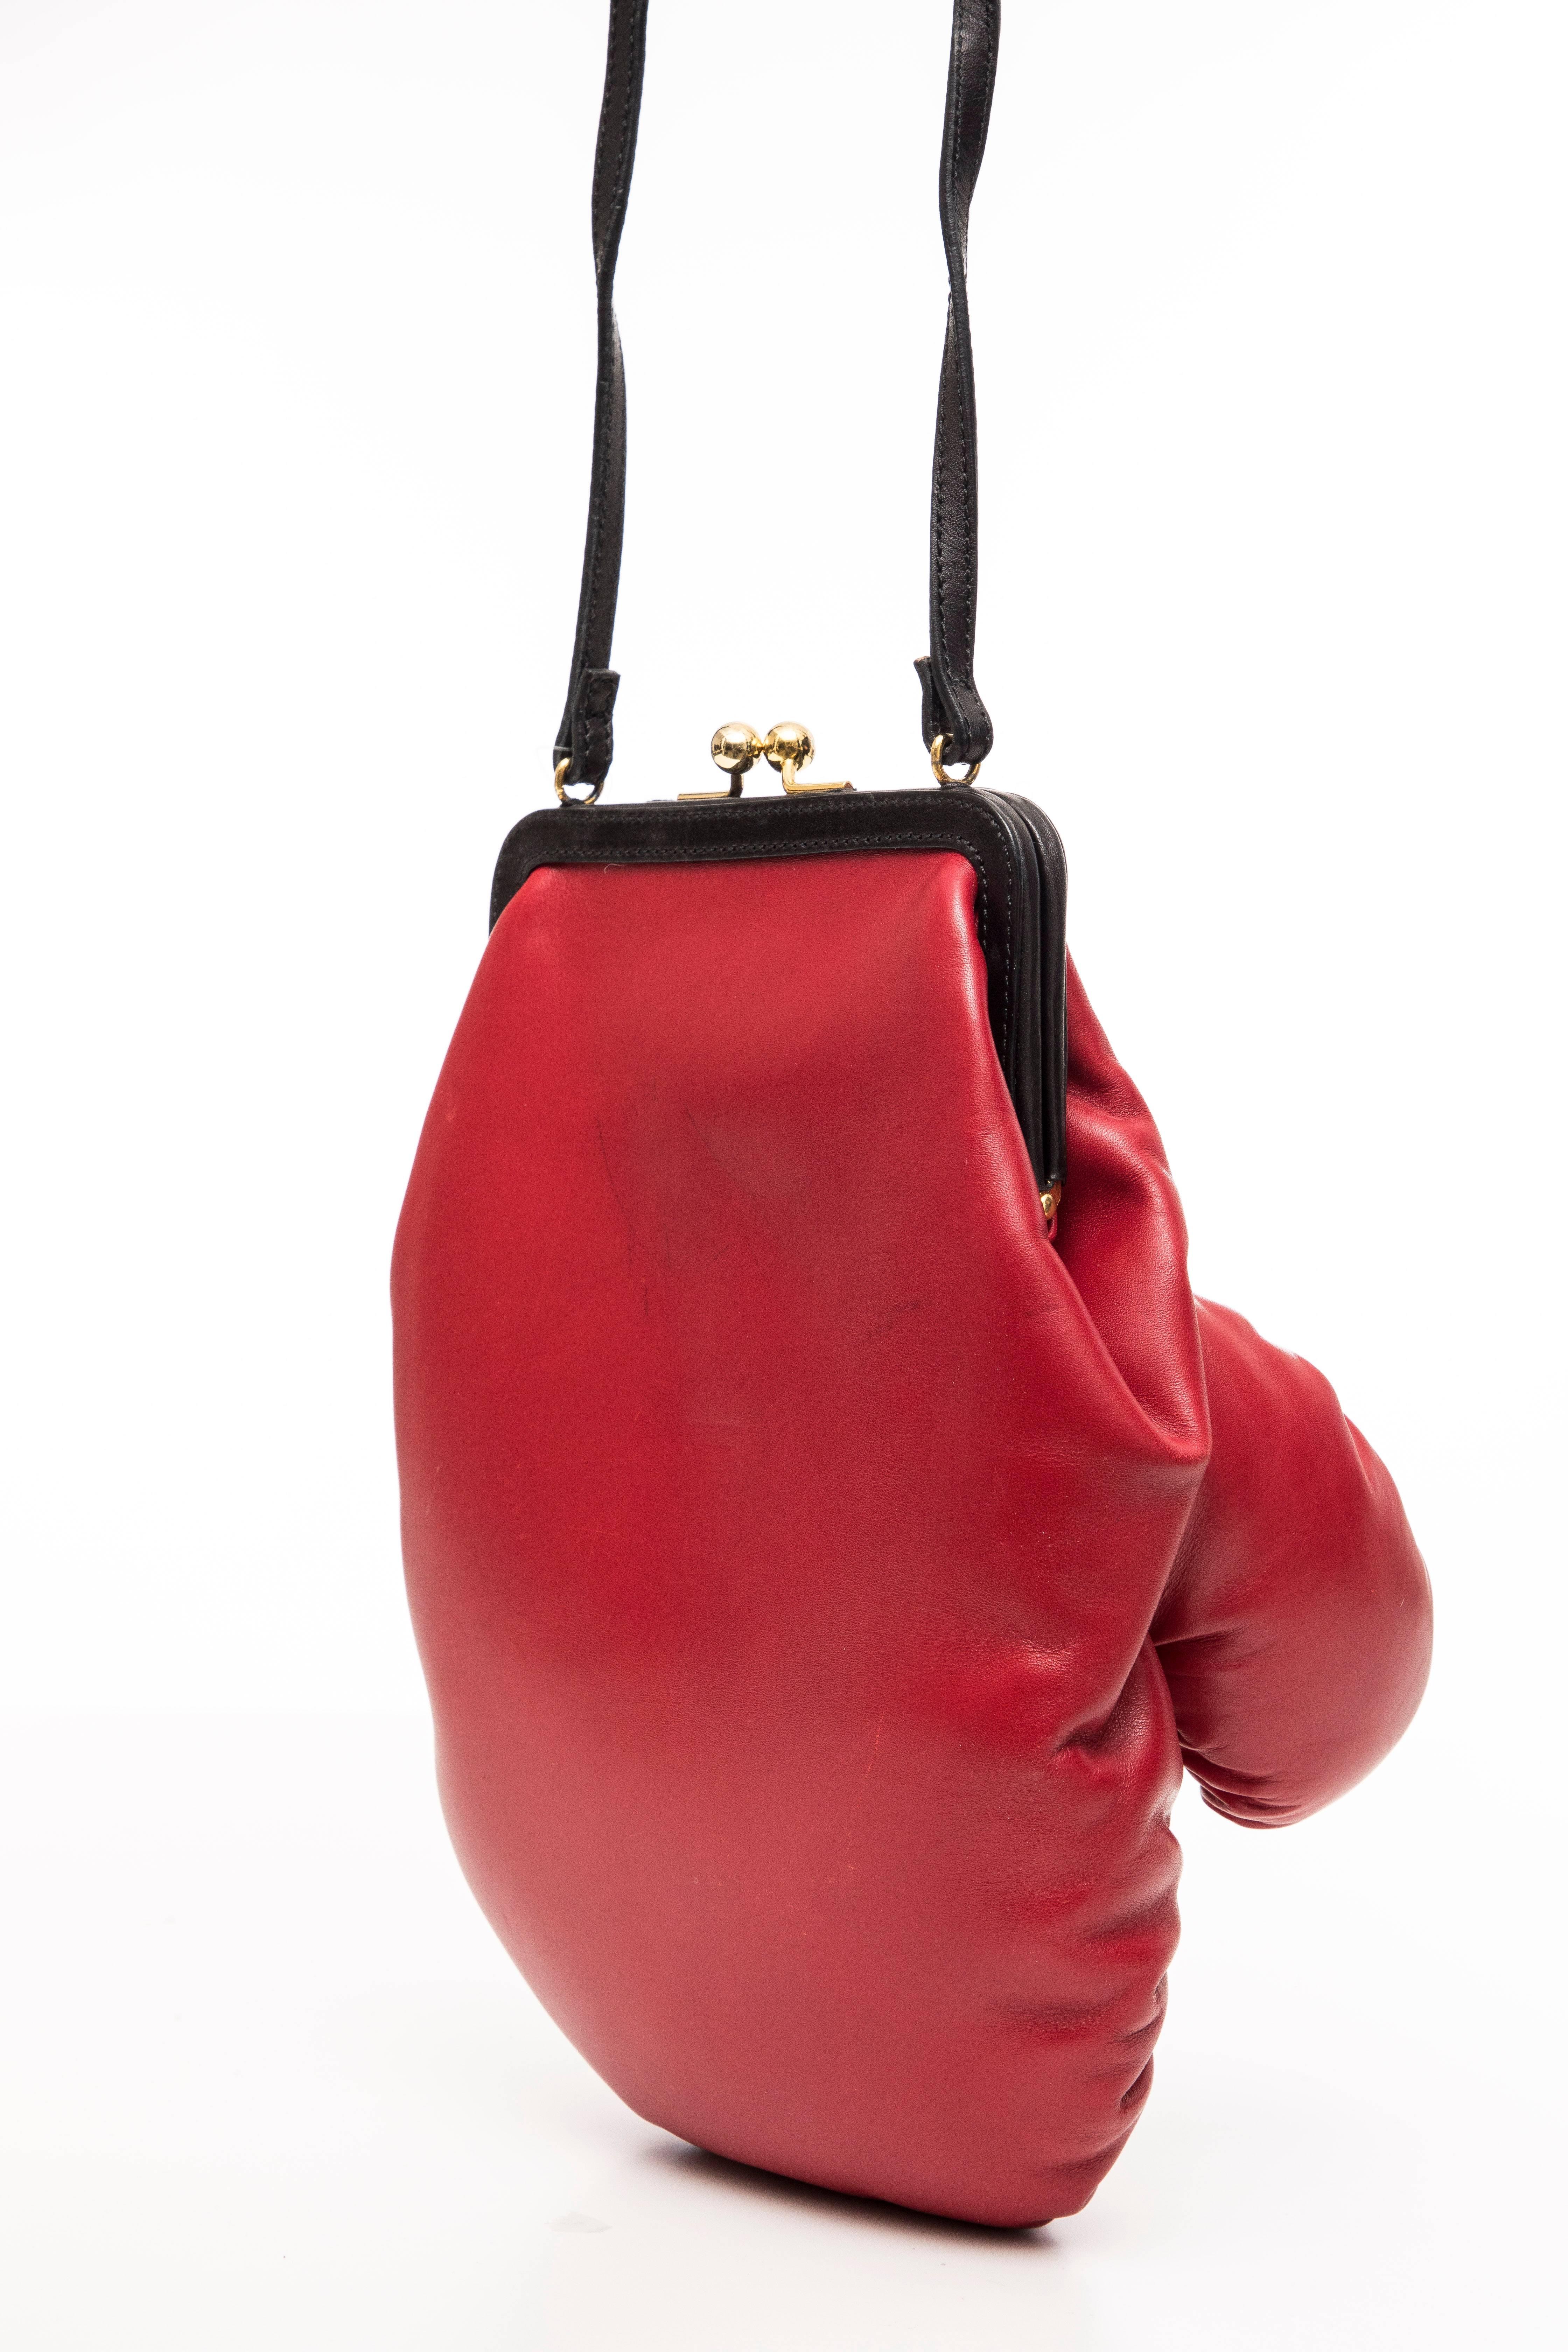 Moschino - Sac à main en cuir de défilé « Boxing Glove », printemps 2001 1